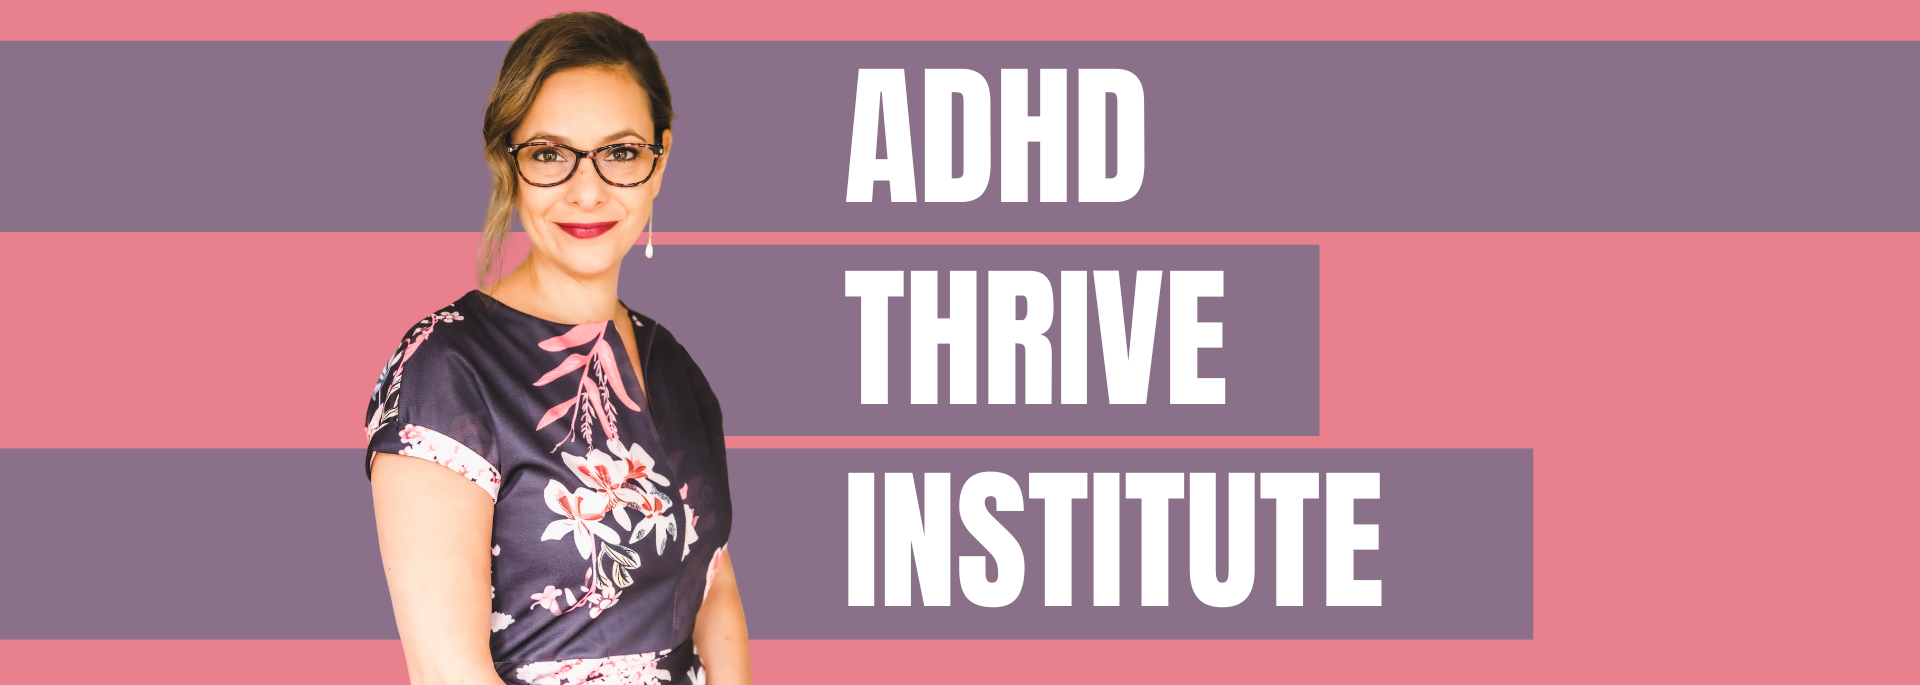 ADHD Thrive Institute